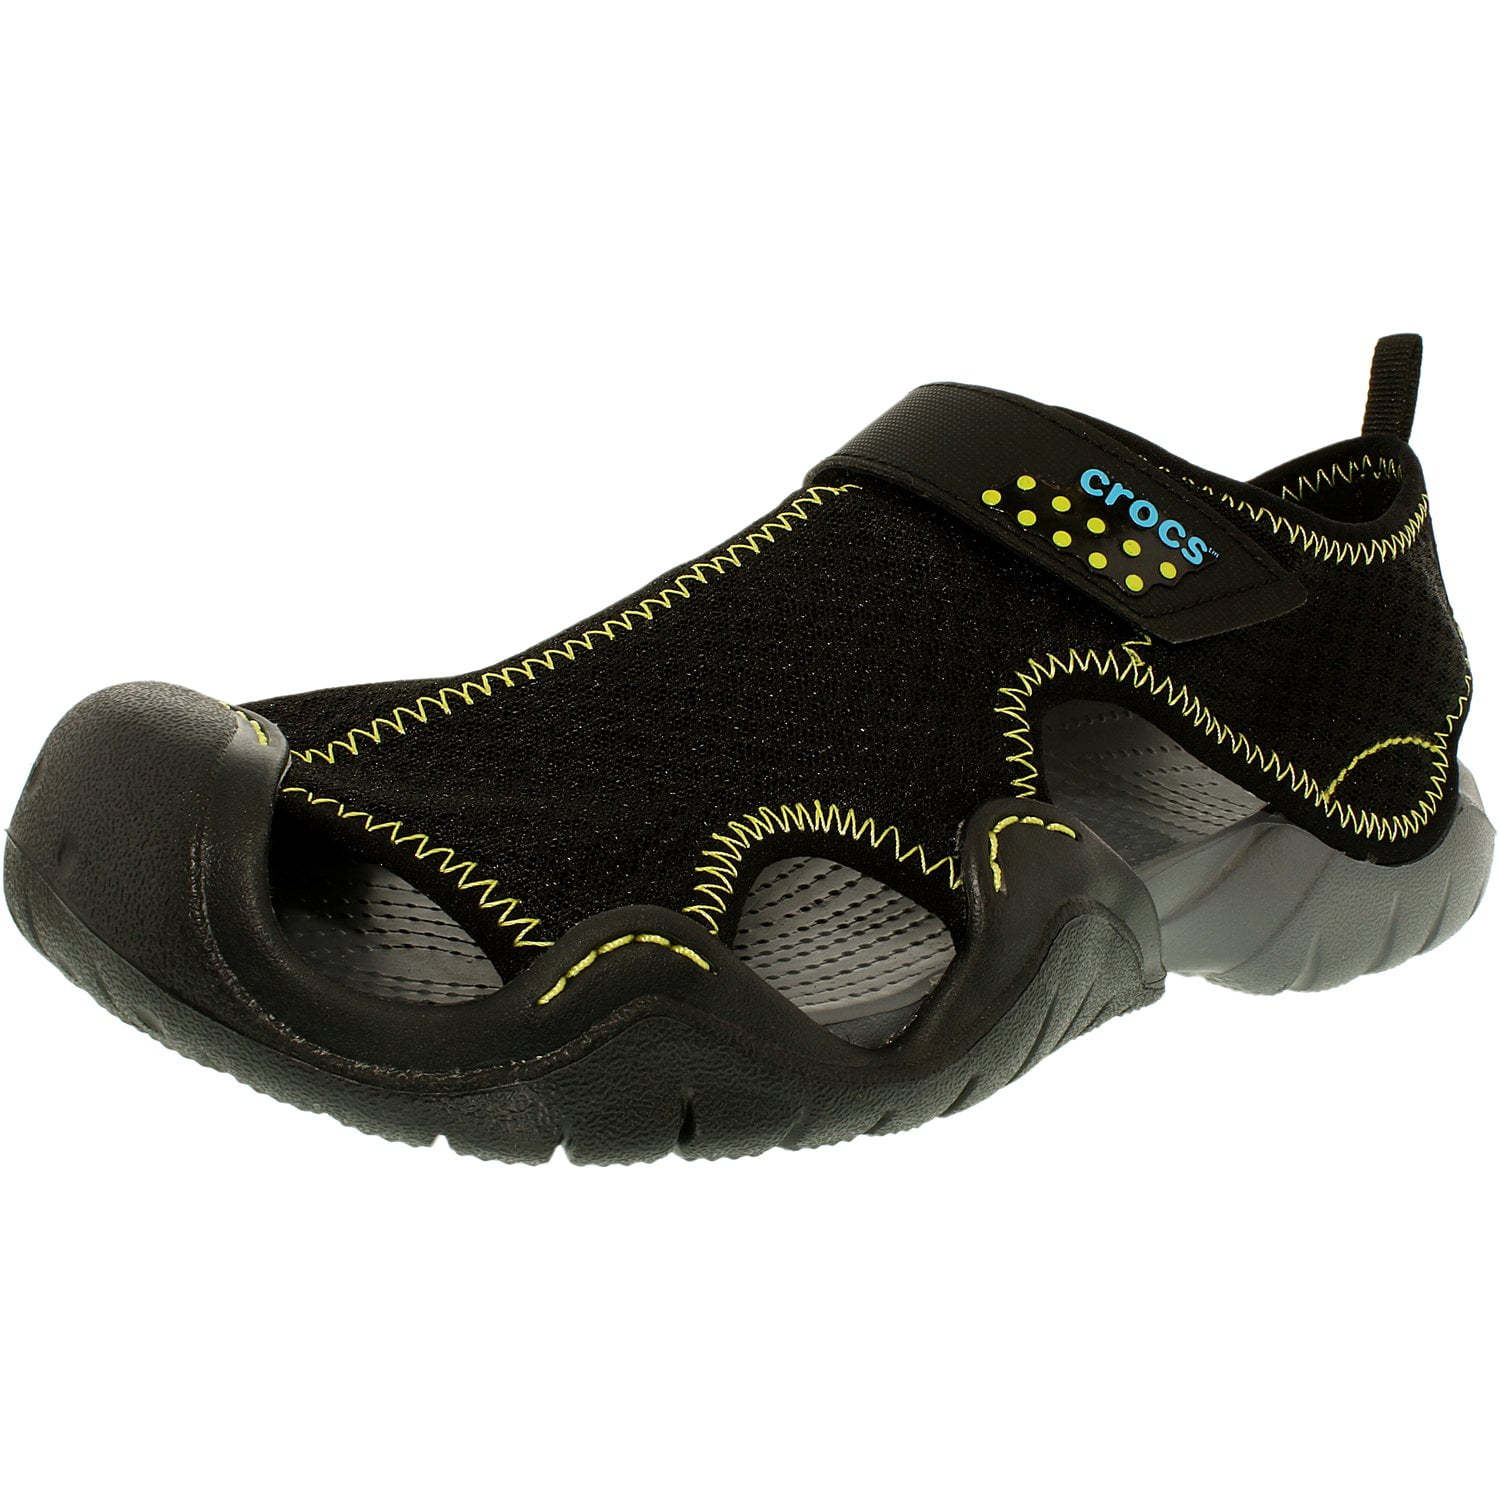 Crocs Men's Swiftwater Sandal Black/Charcoal Ankle-High Rubber - 9M ...